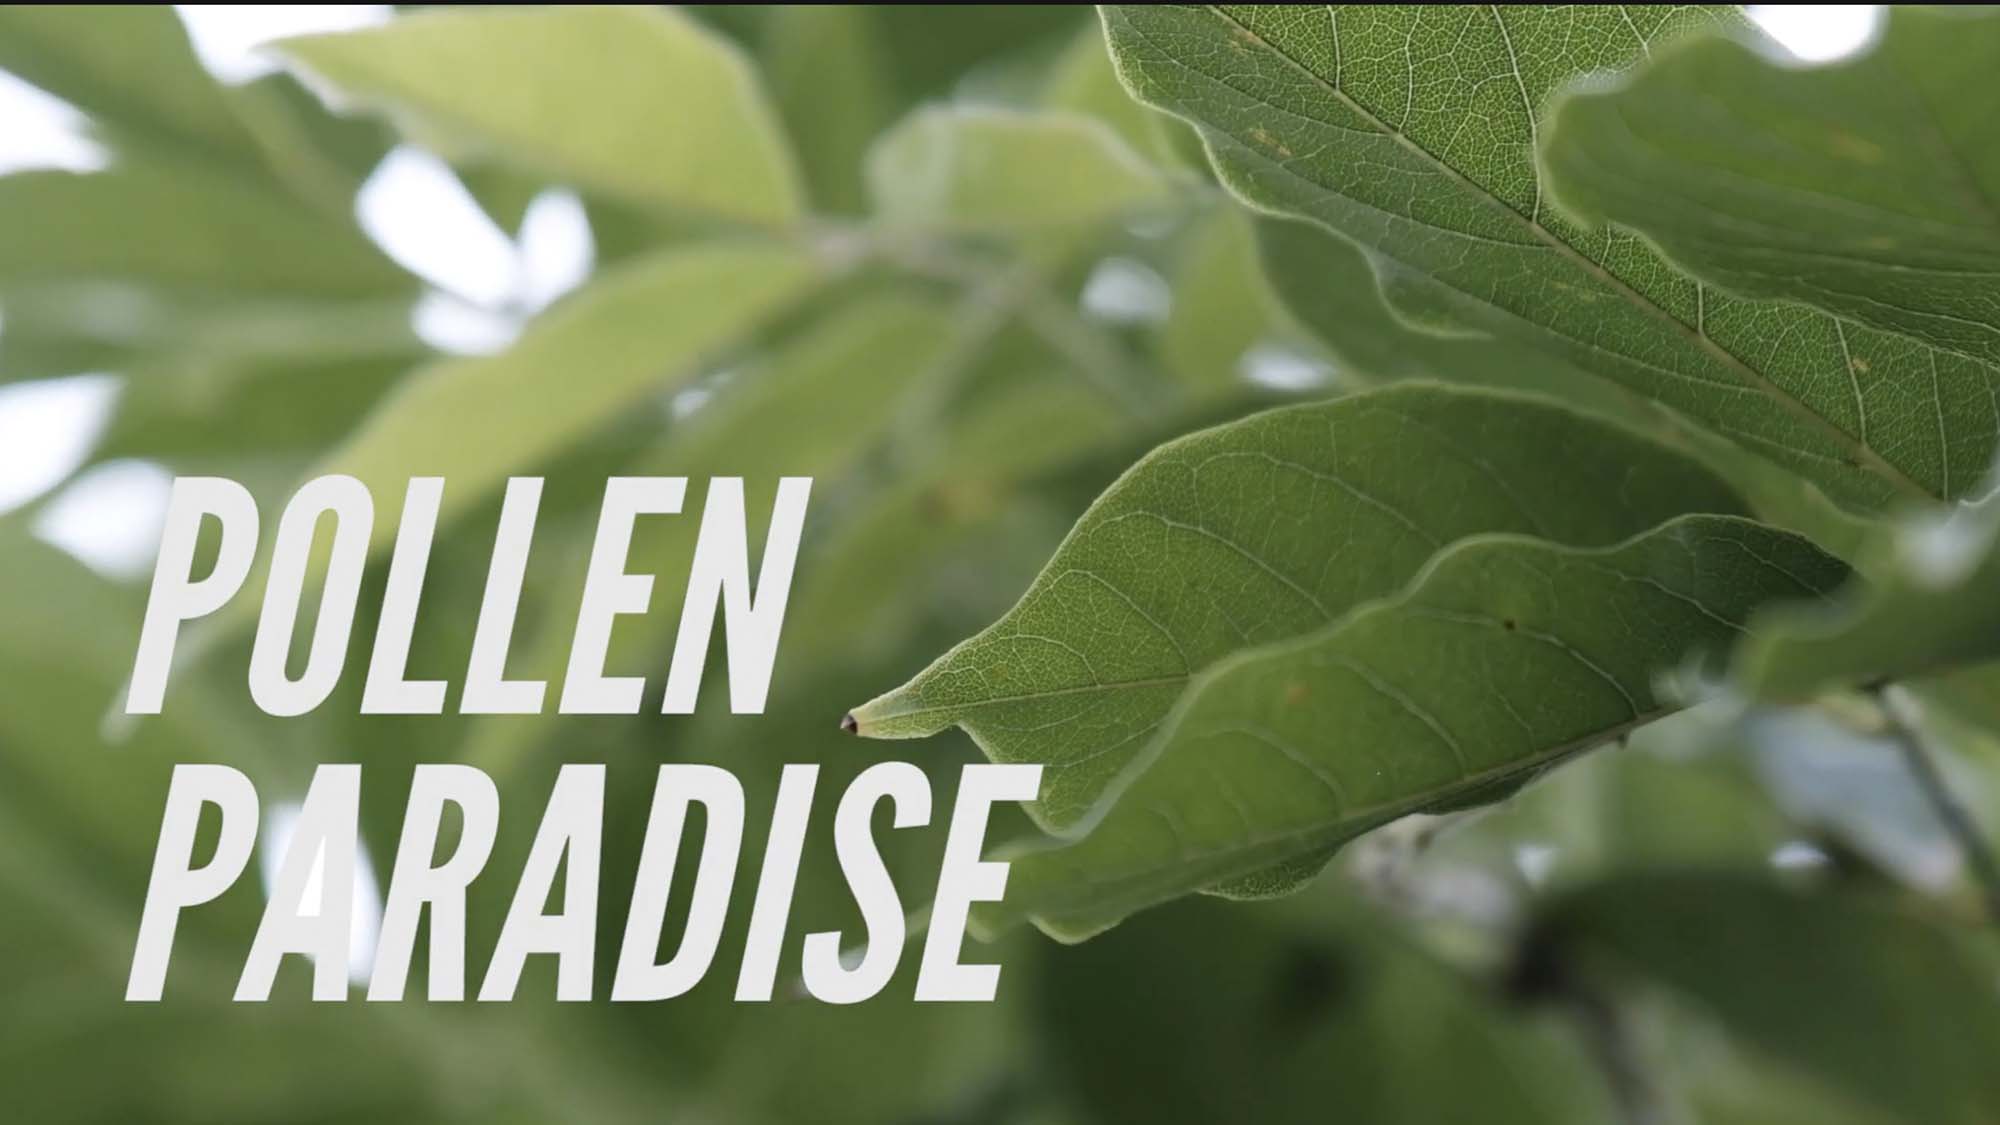 Screenshot Pollen paradise wildlife nature video production company in singapore coco creative studio